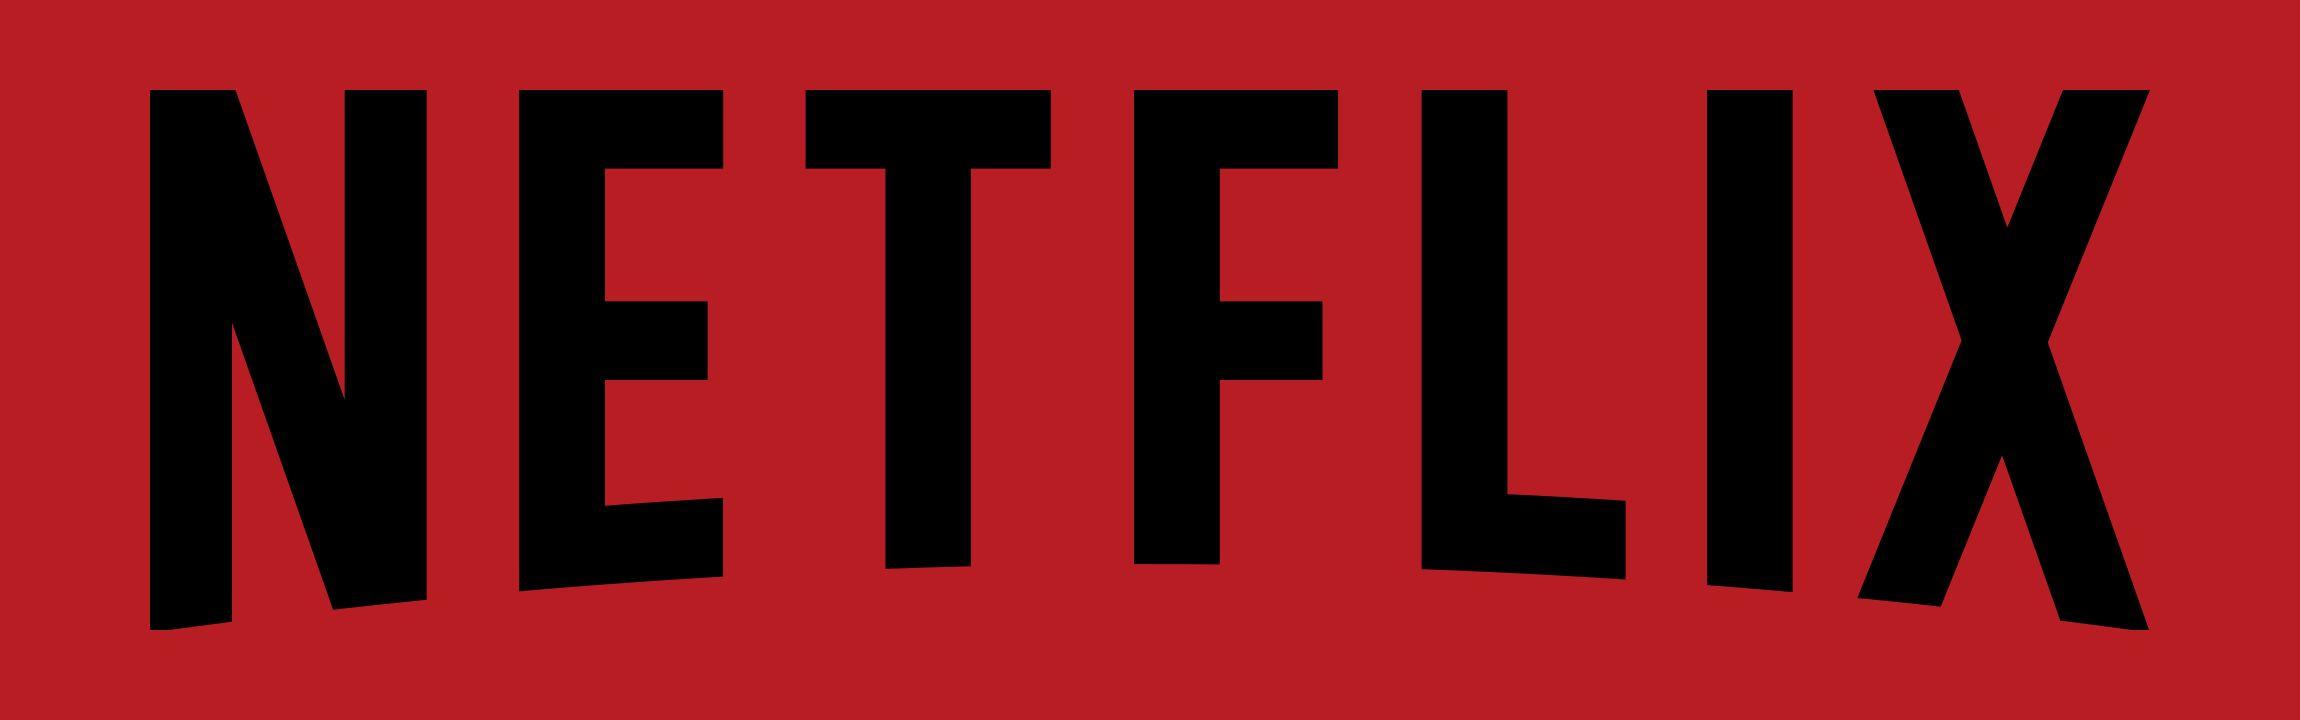 Netflix Streaming Logo - Netflix Logo, Netflix Symbol, Meaning, History and Evolution